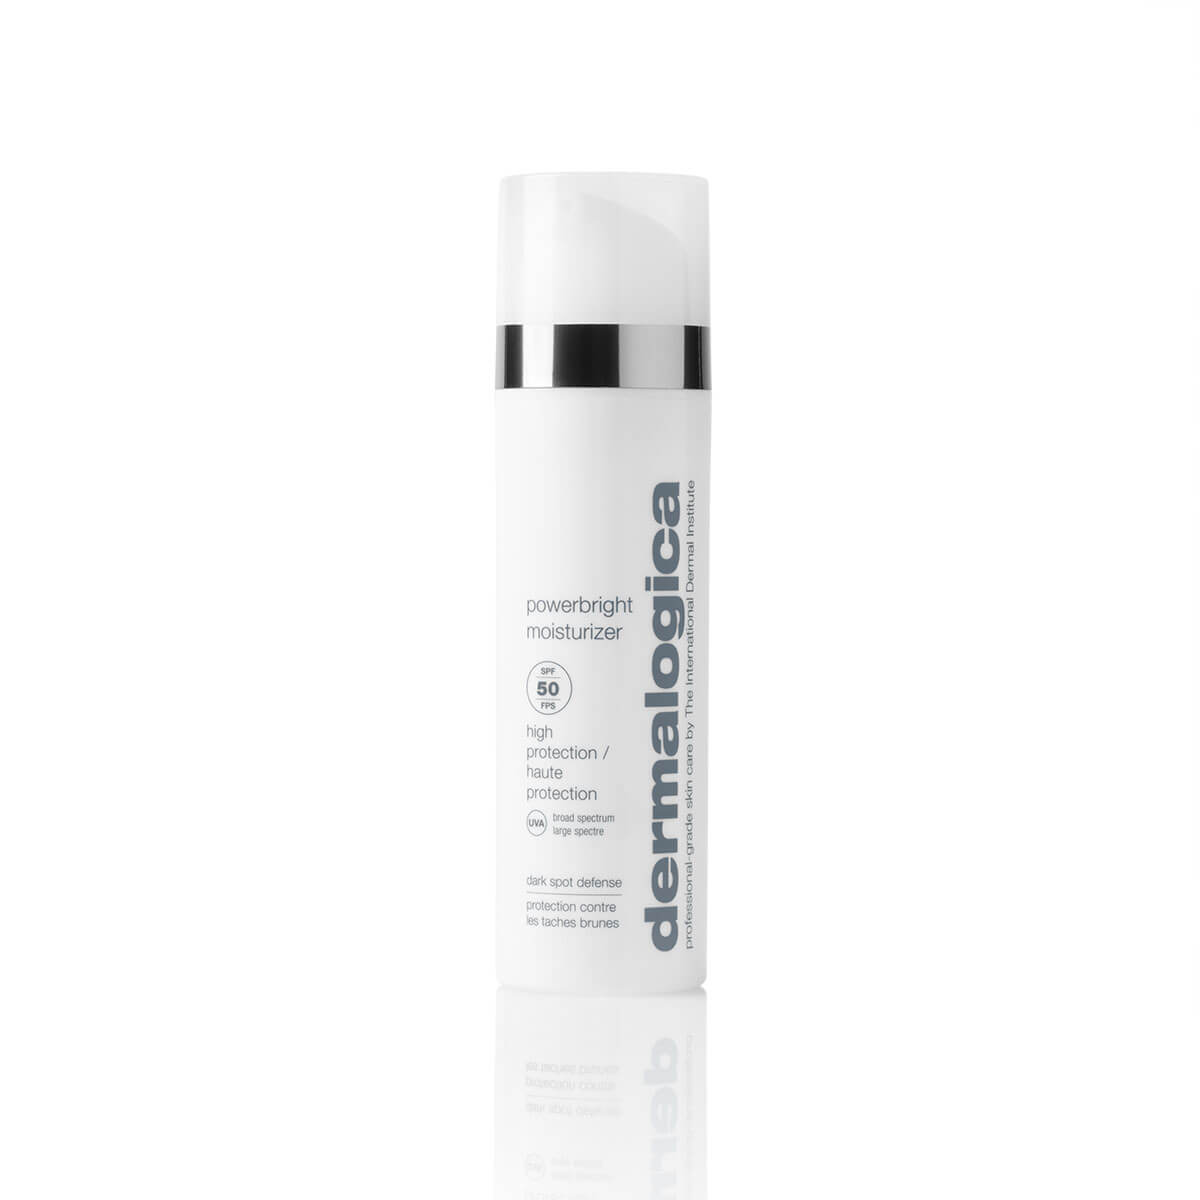 powerbright moisturizer spf50 (50ml)